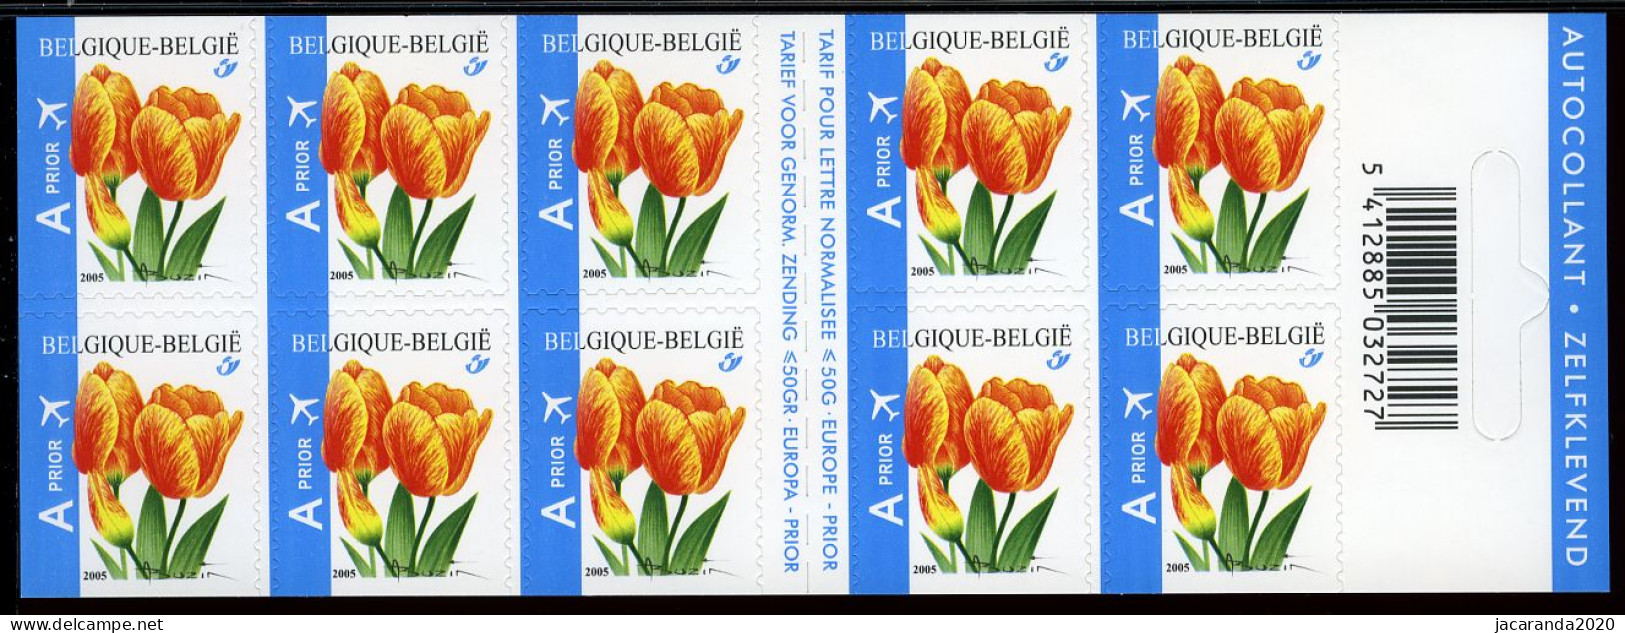 België B54 - Bloemen - Fleurs - Tulpen - Oranje Tulp - André Buzin - Zelfklevend - Autocollants - Validité Perm. - 2005 - 1997-… Dauerhafte Gültigkeit [B]